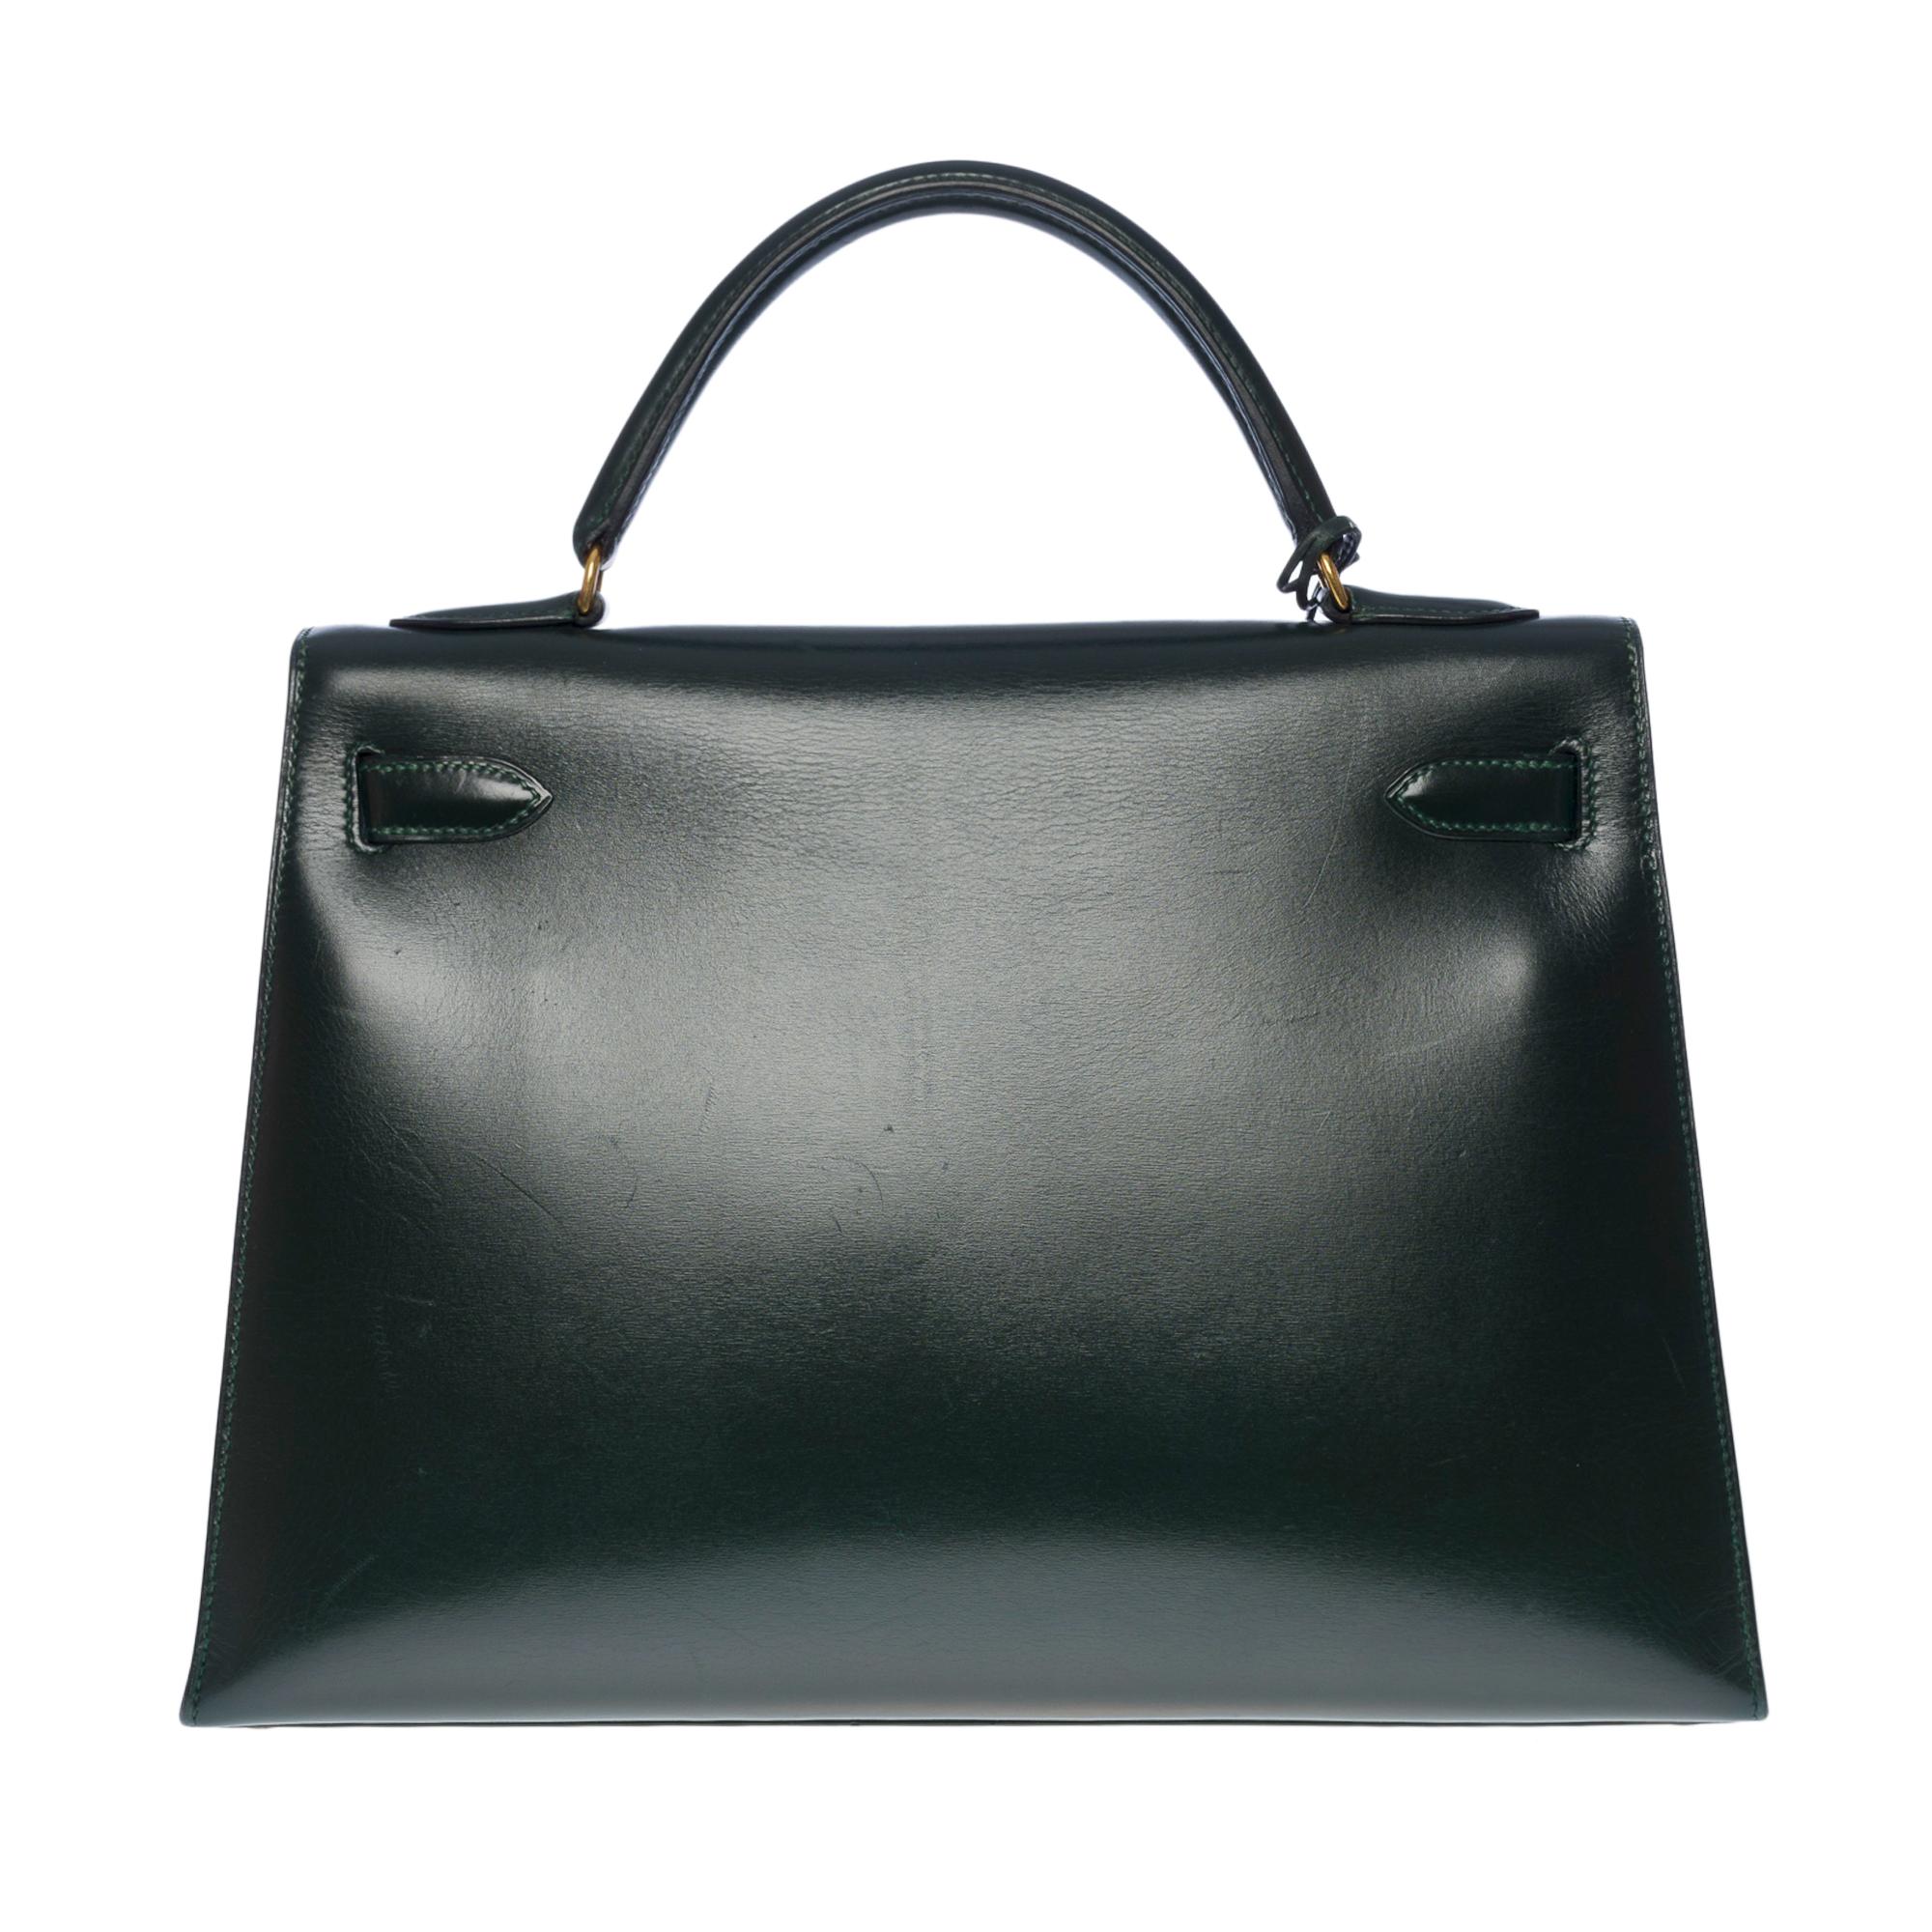 Rare Hermès Kelly 32 sellier handbag double straps in green box calf leather, GHW Unisexe en vente